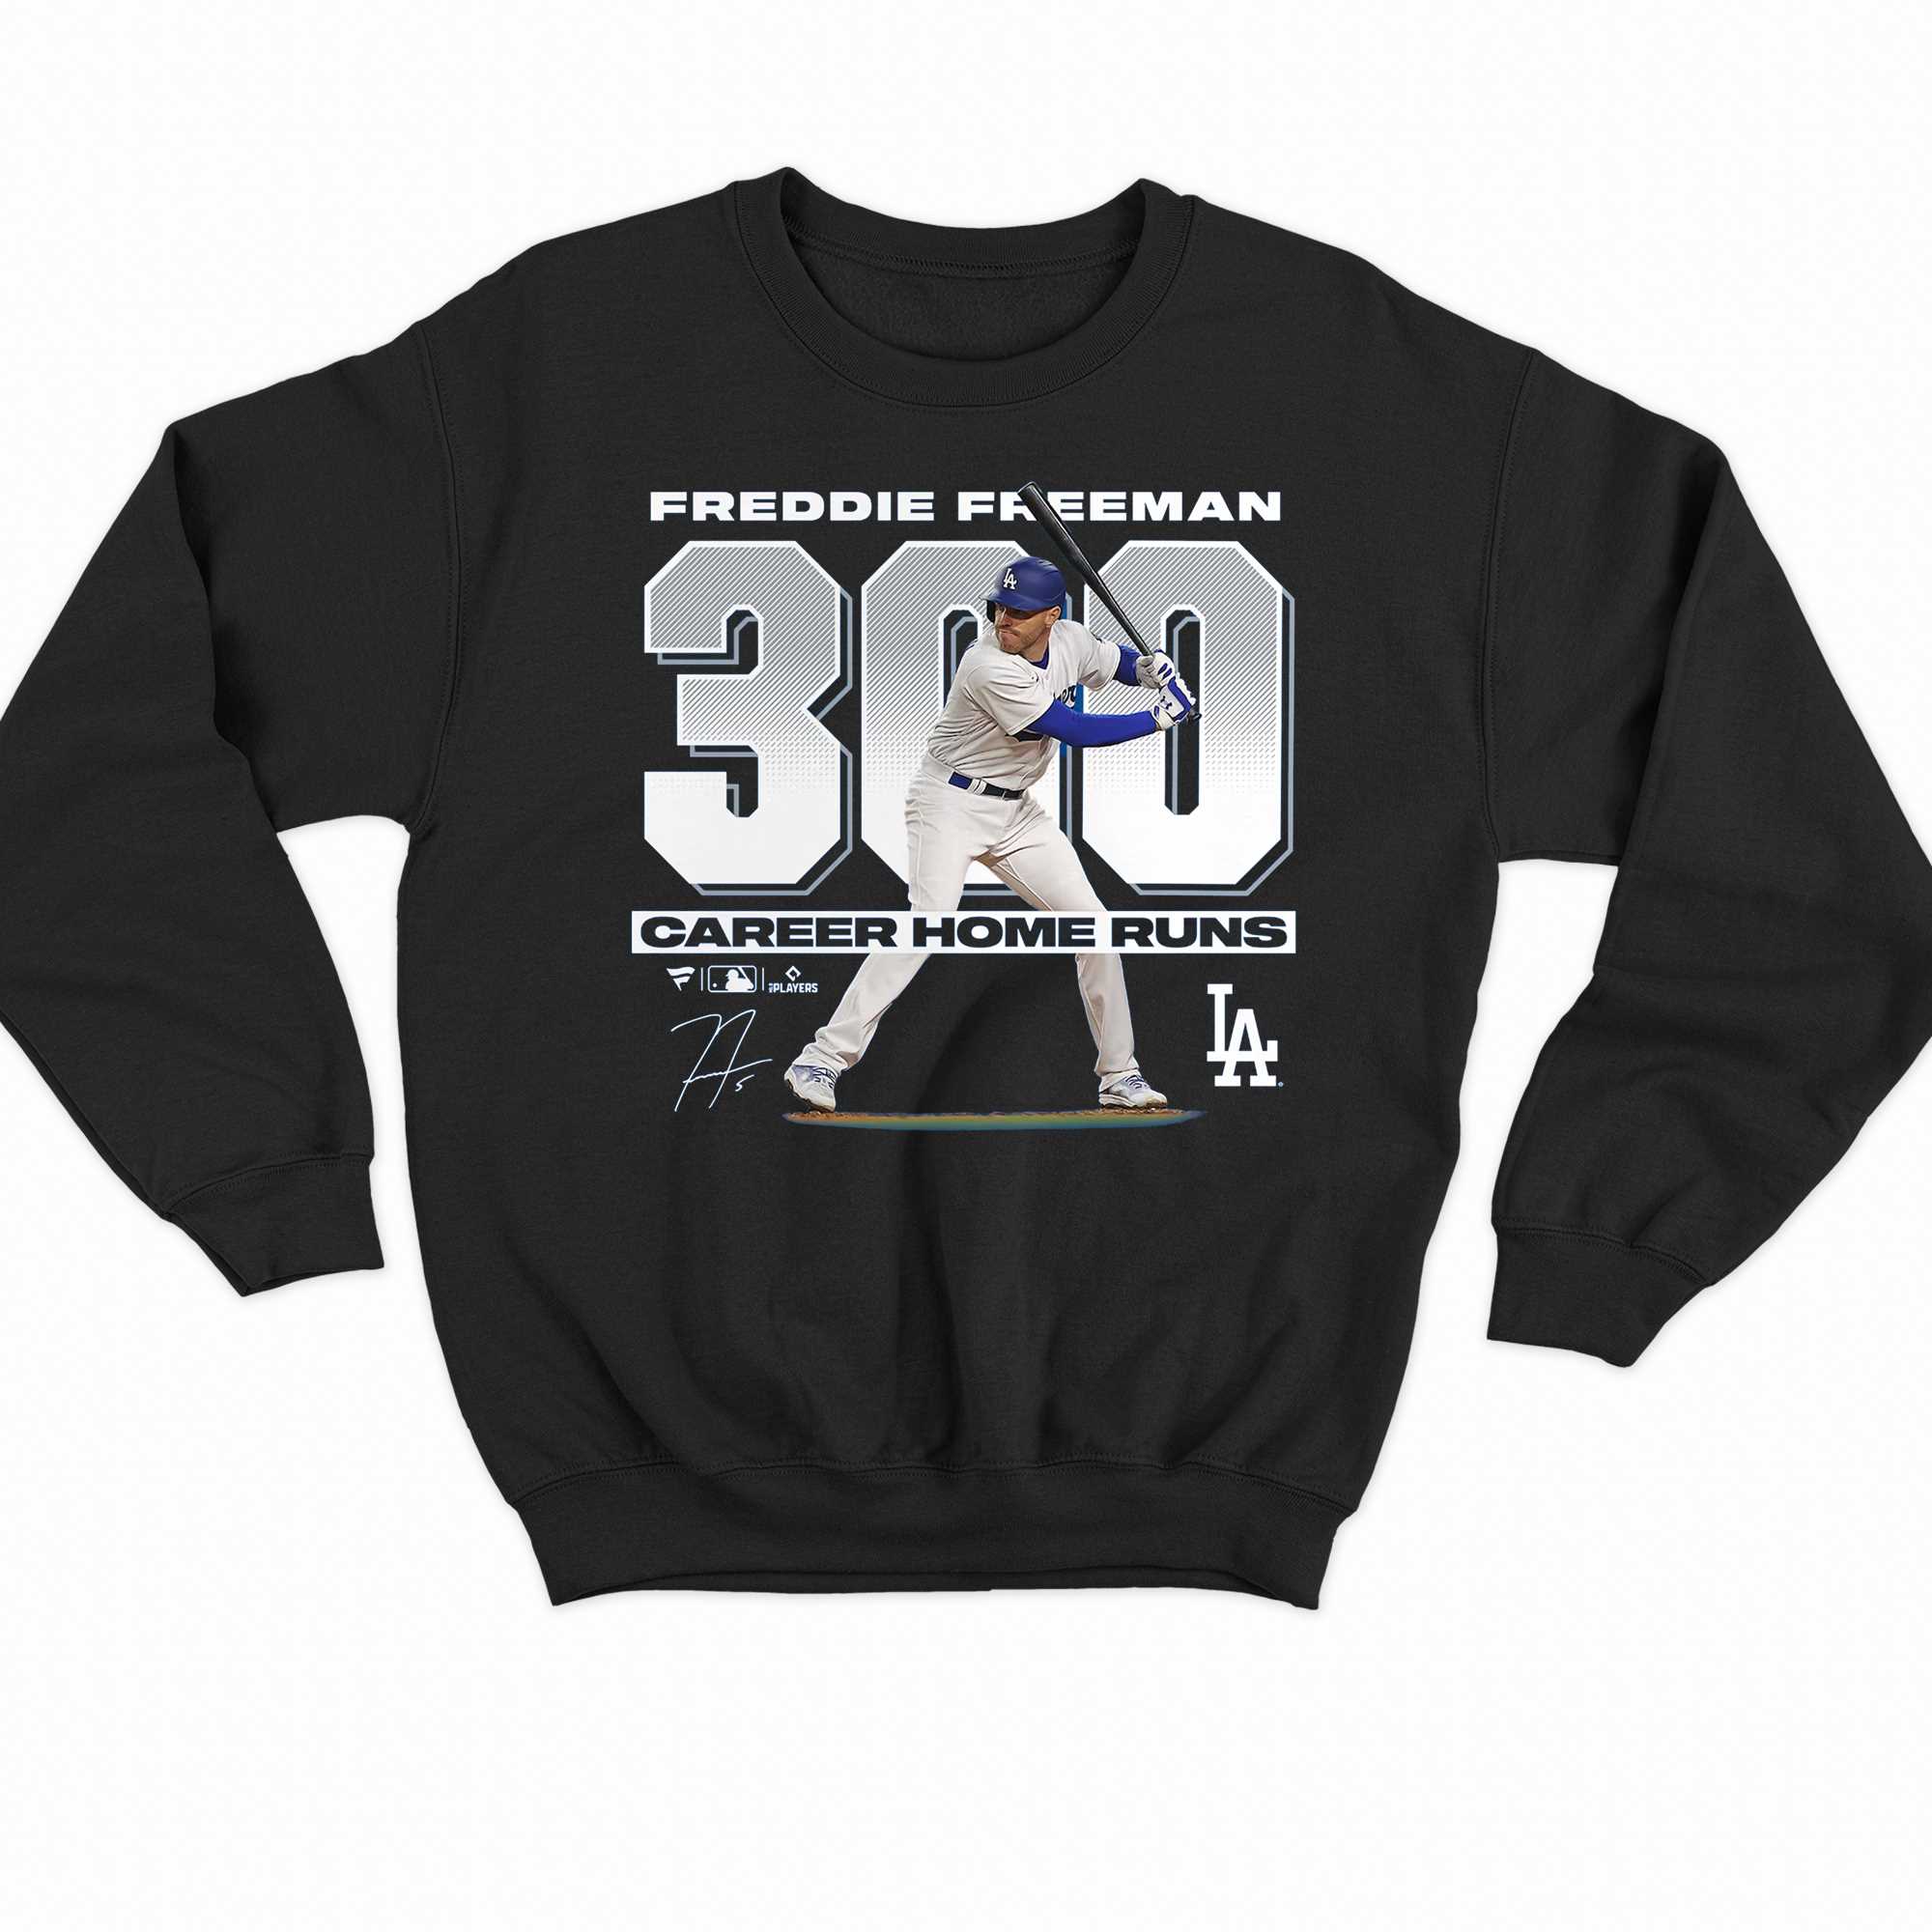 Freddie Freeman Los Angeles Dodgers Fanatics Branded 300 Career Home Runs T-shirt 